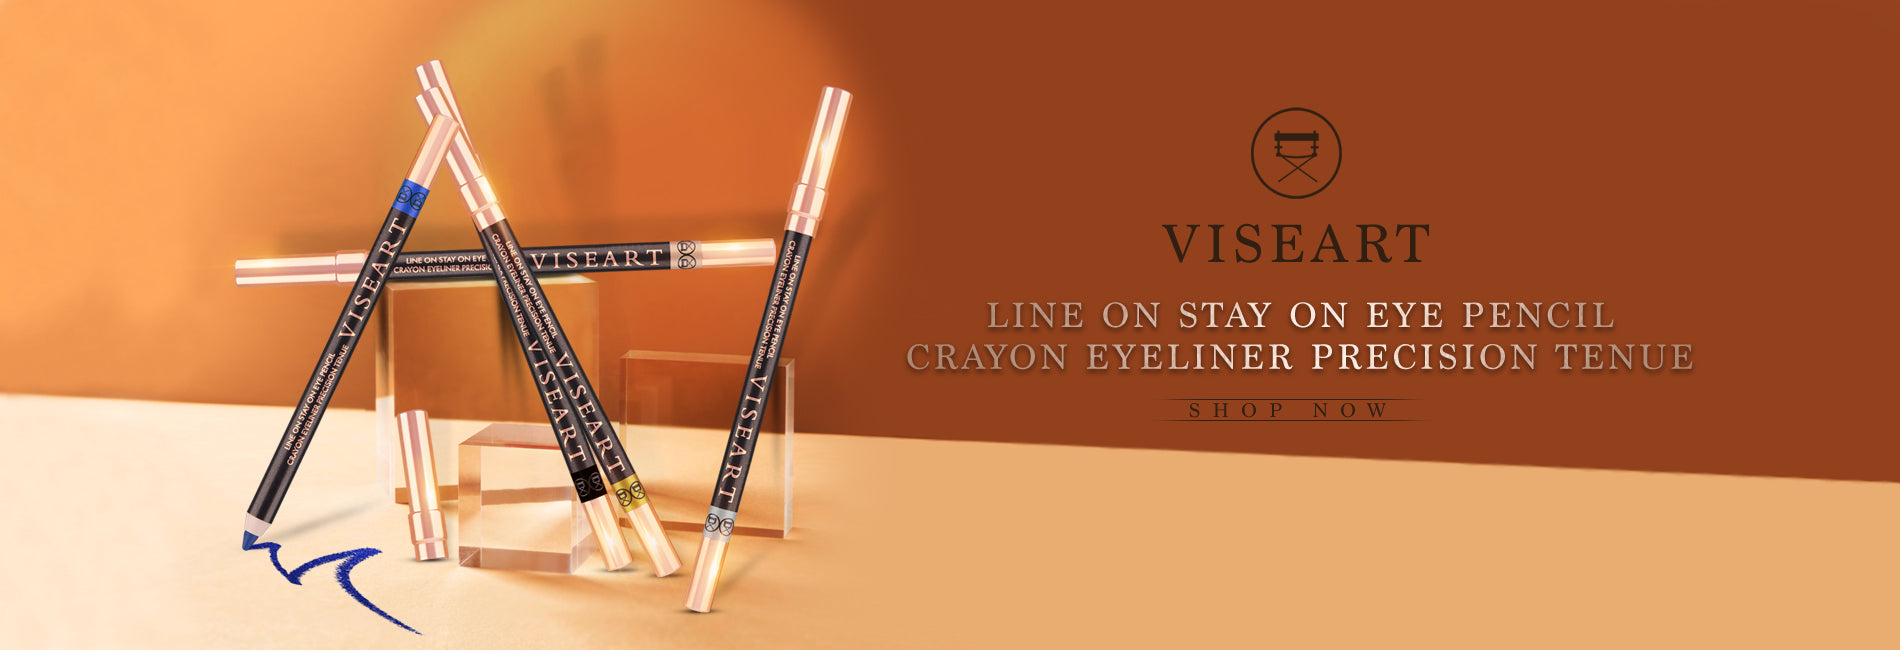 Line on Stay on eye Pencil - Viseart